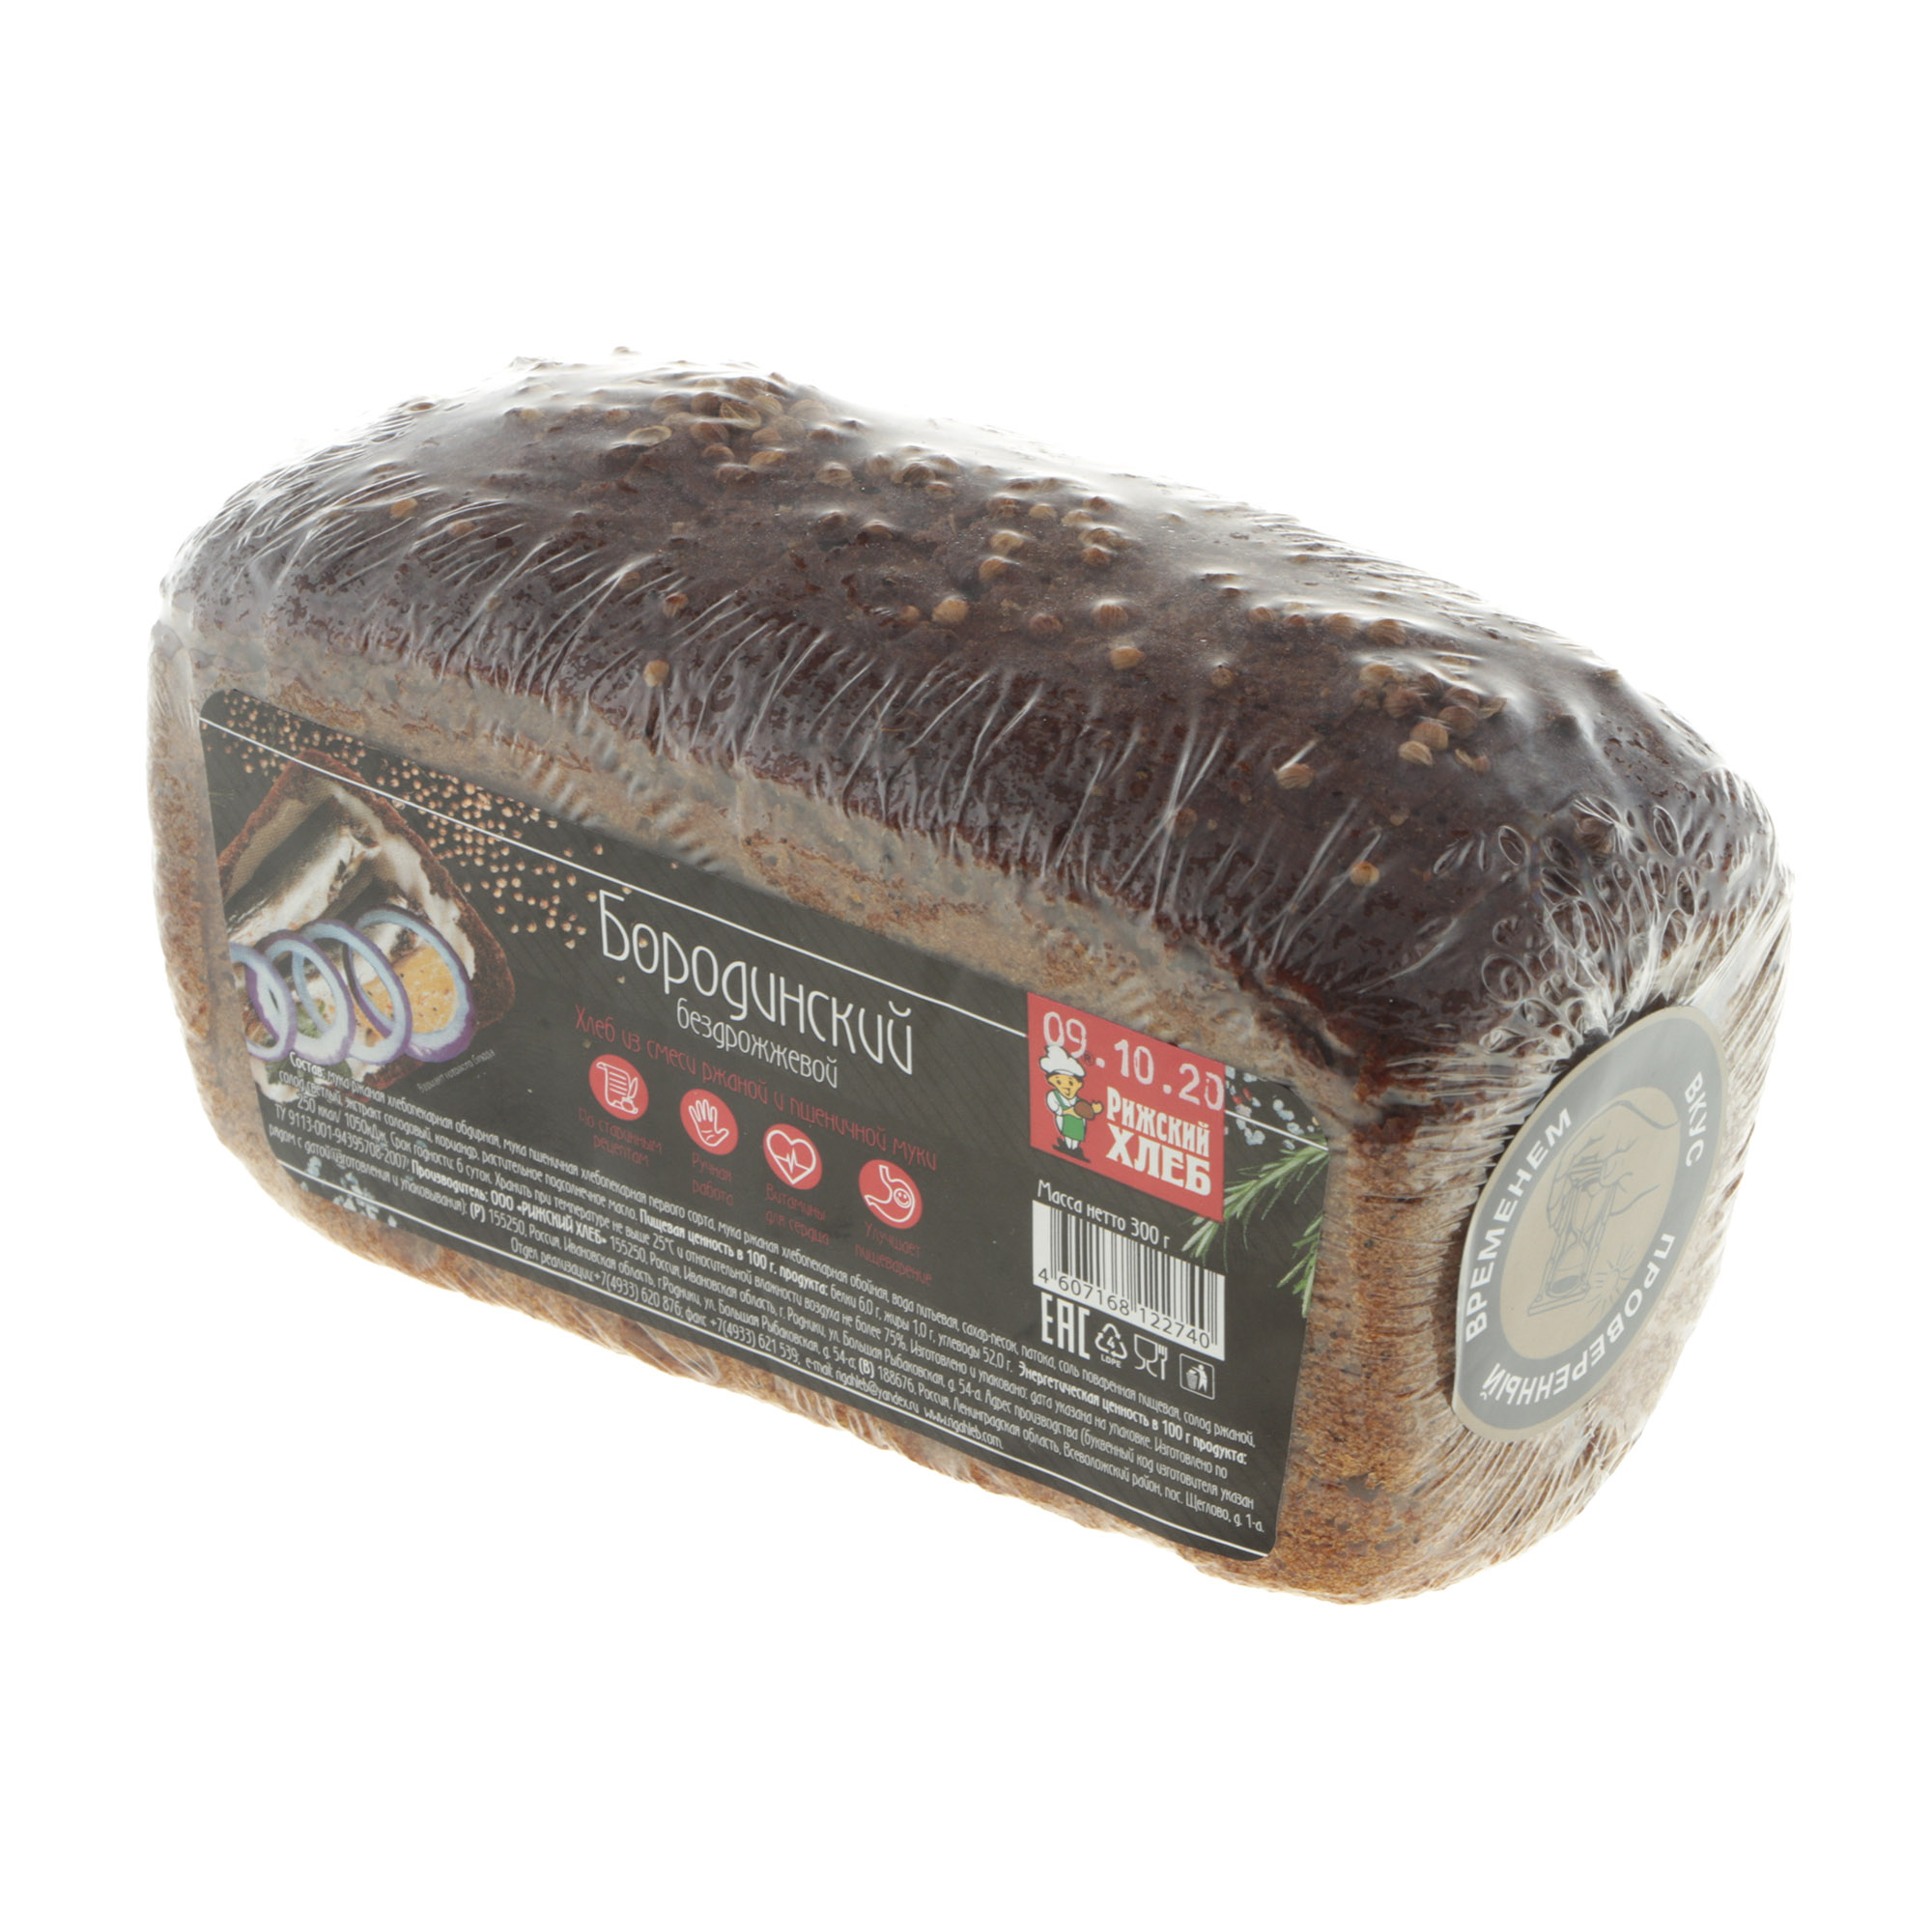 Хлеб Рижский хлеб бородинский 300 г хлеб бородинский бездрожжевой рижский хлеб 300 г